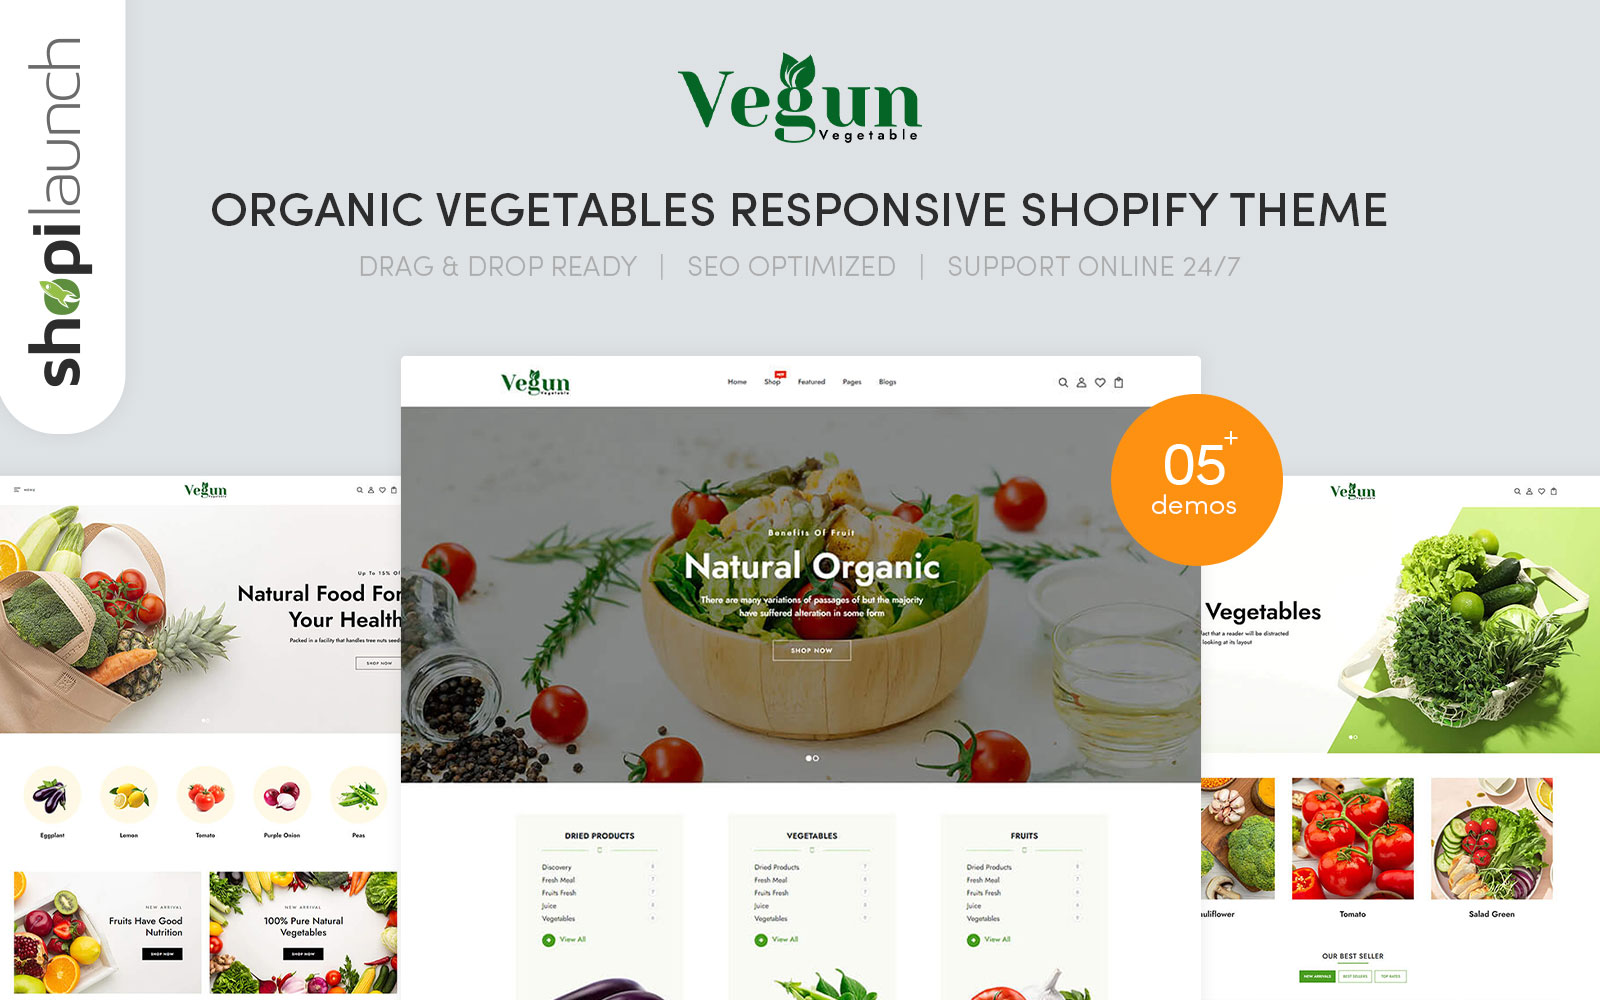 Vegun - Organic Vegetables Responsive Shopify Theme